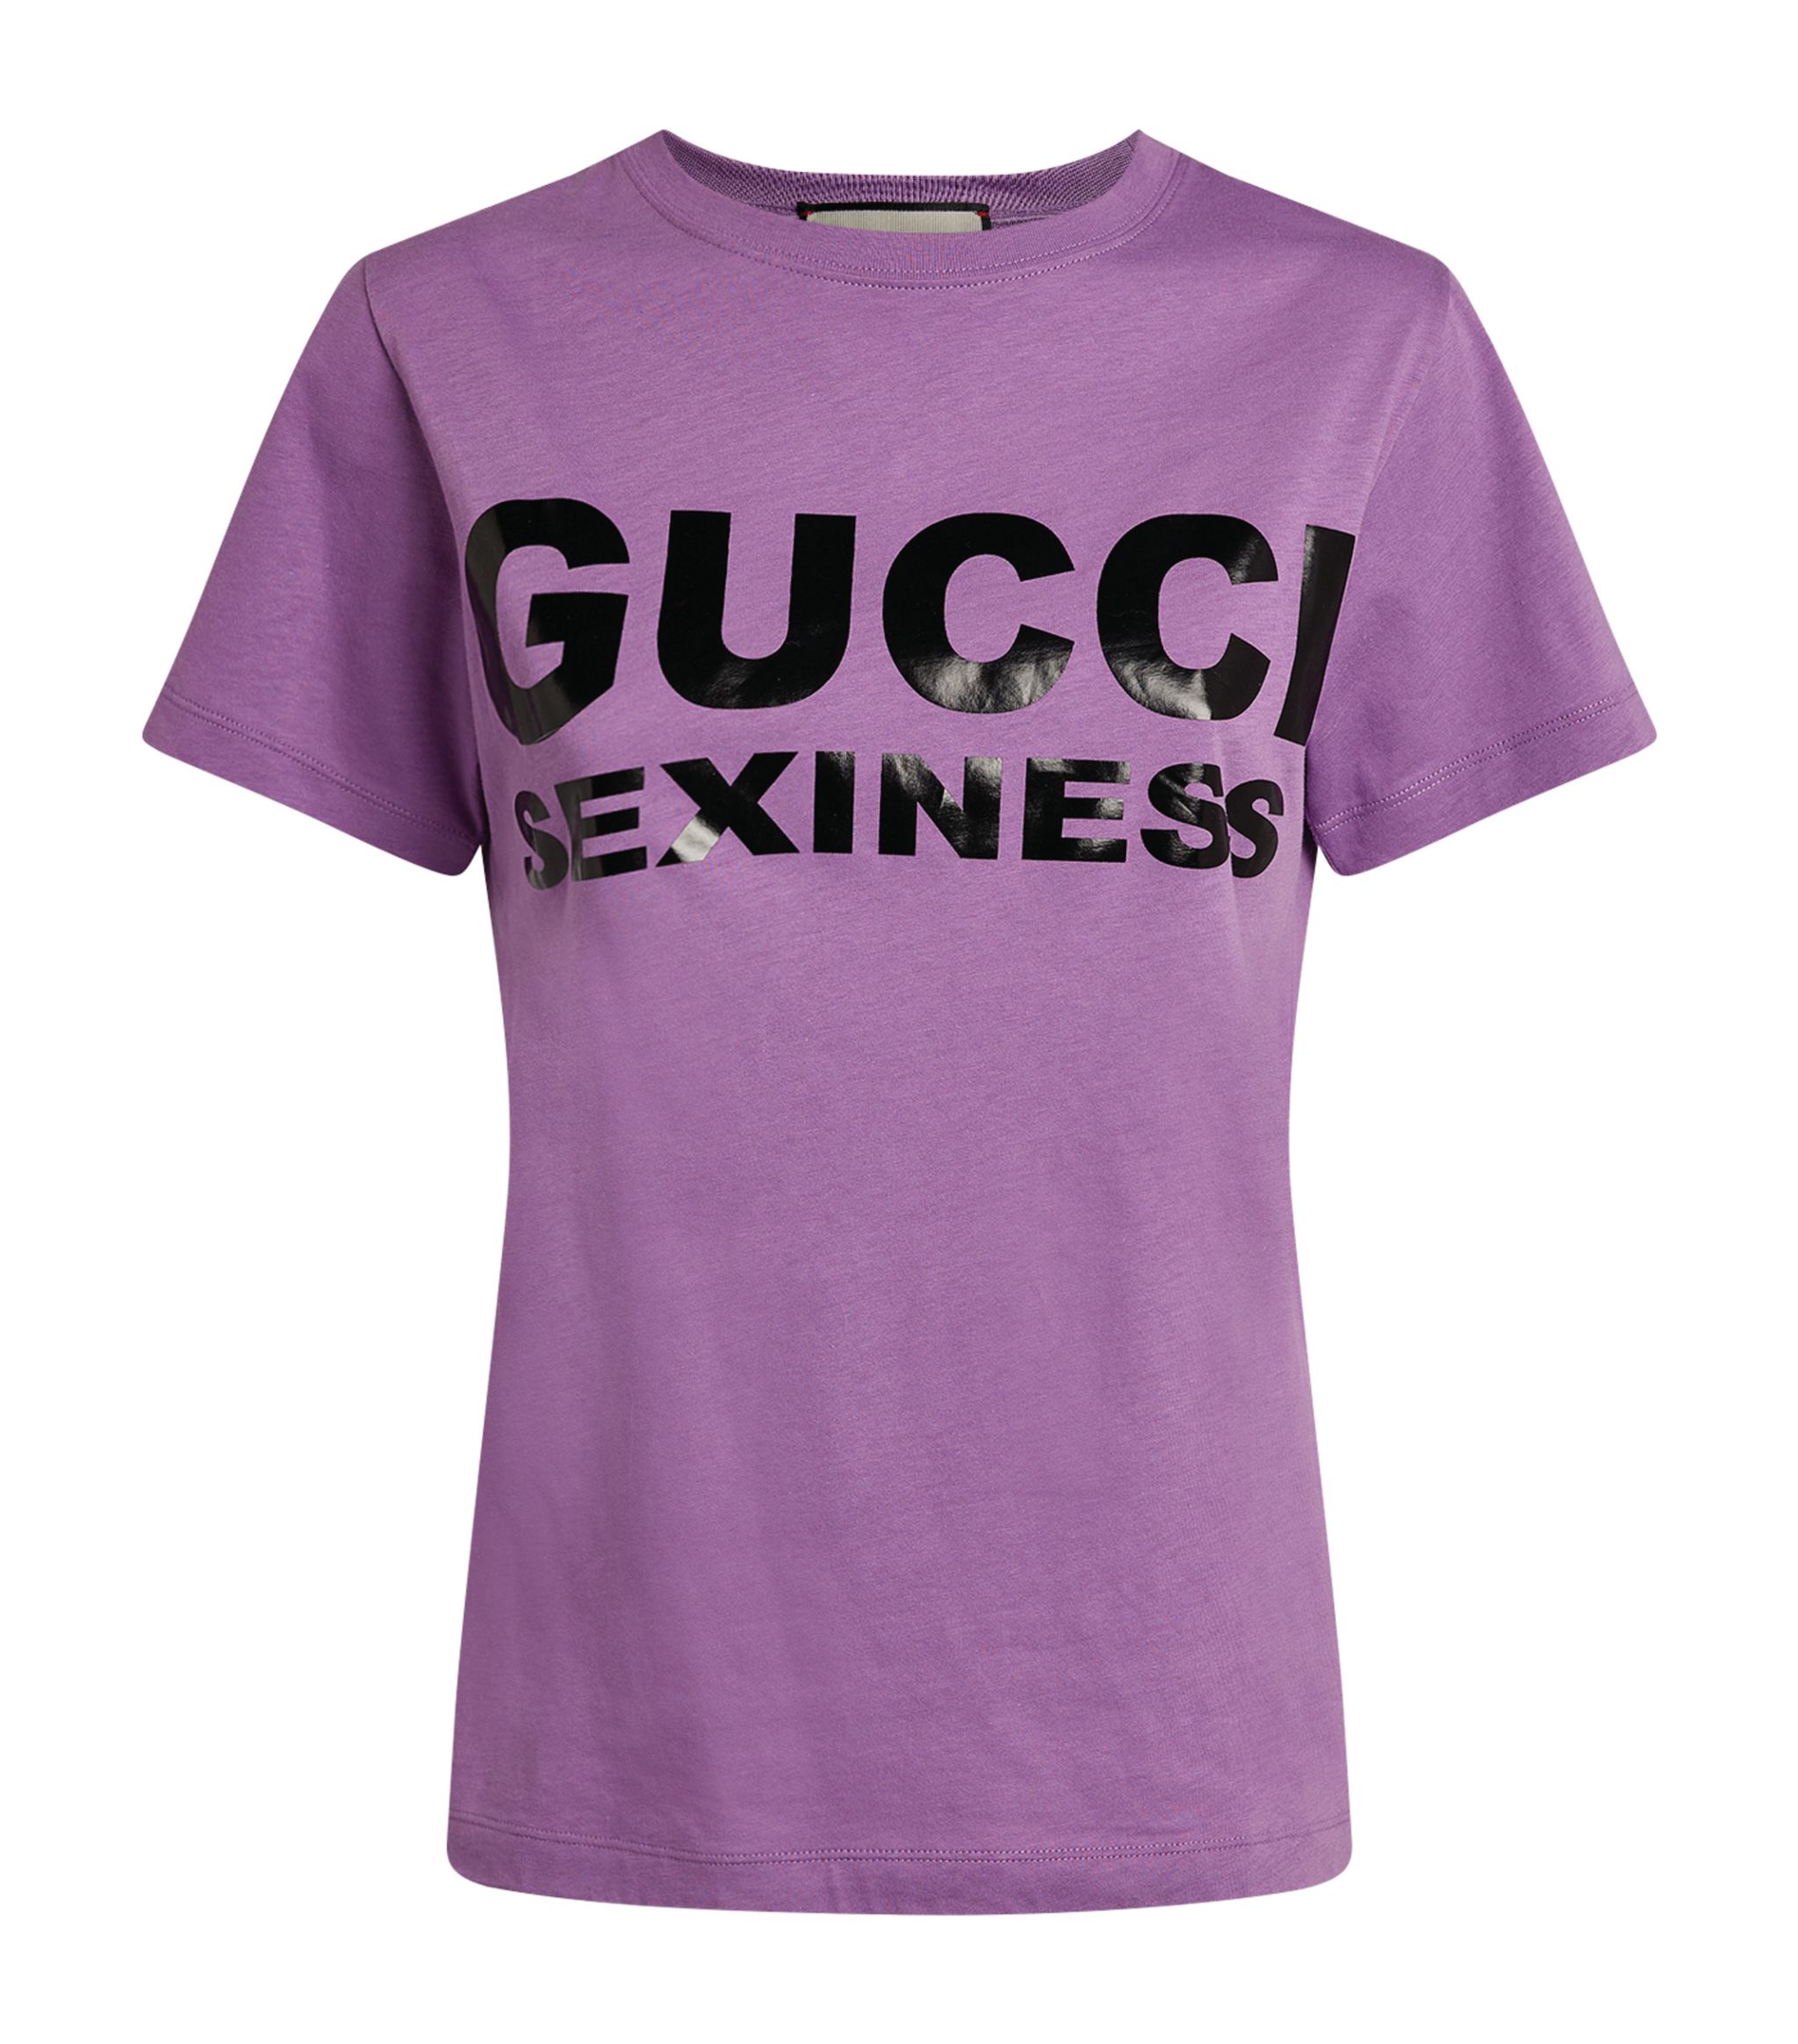 gucci-sexiness-slogan-t-shirt_15327829_26687337_2048